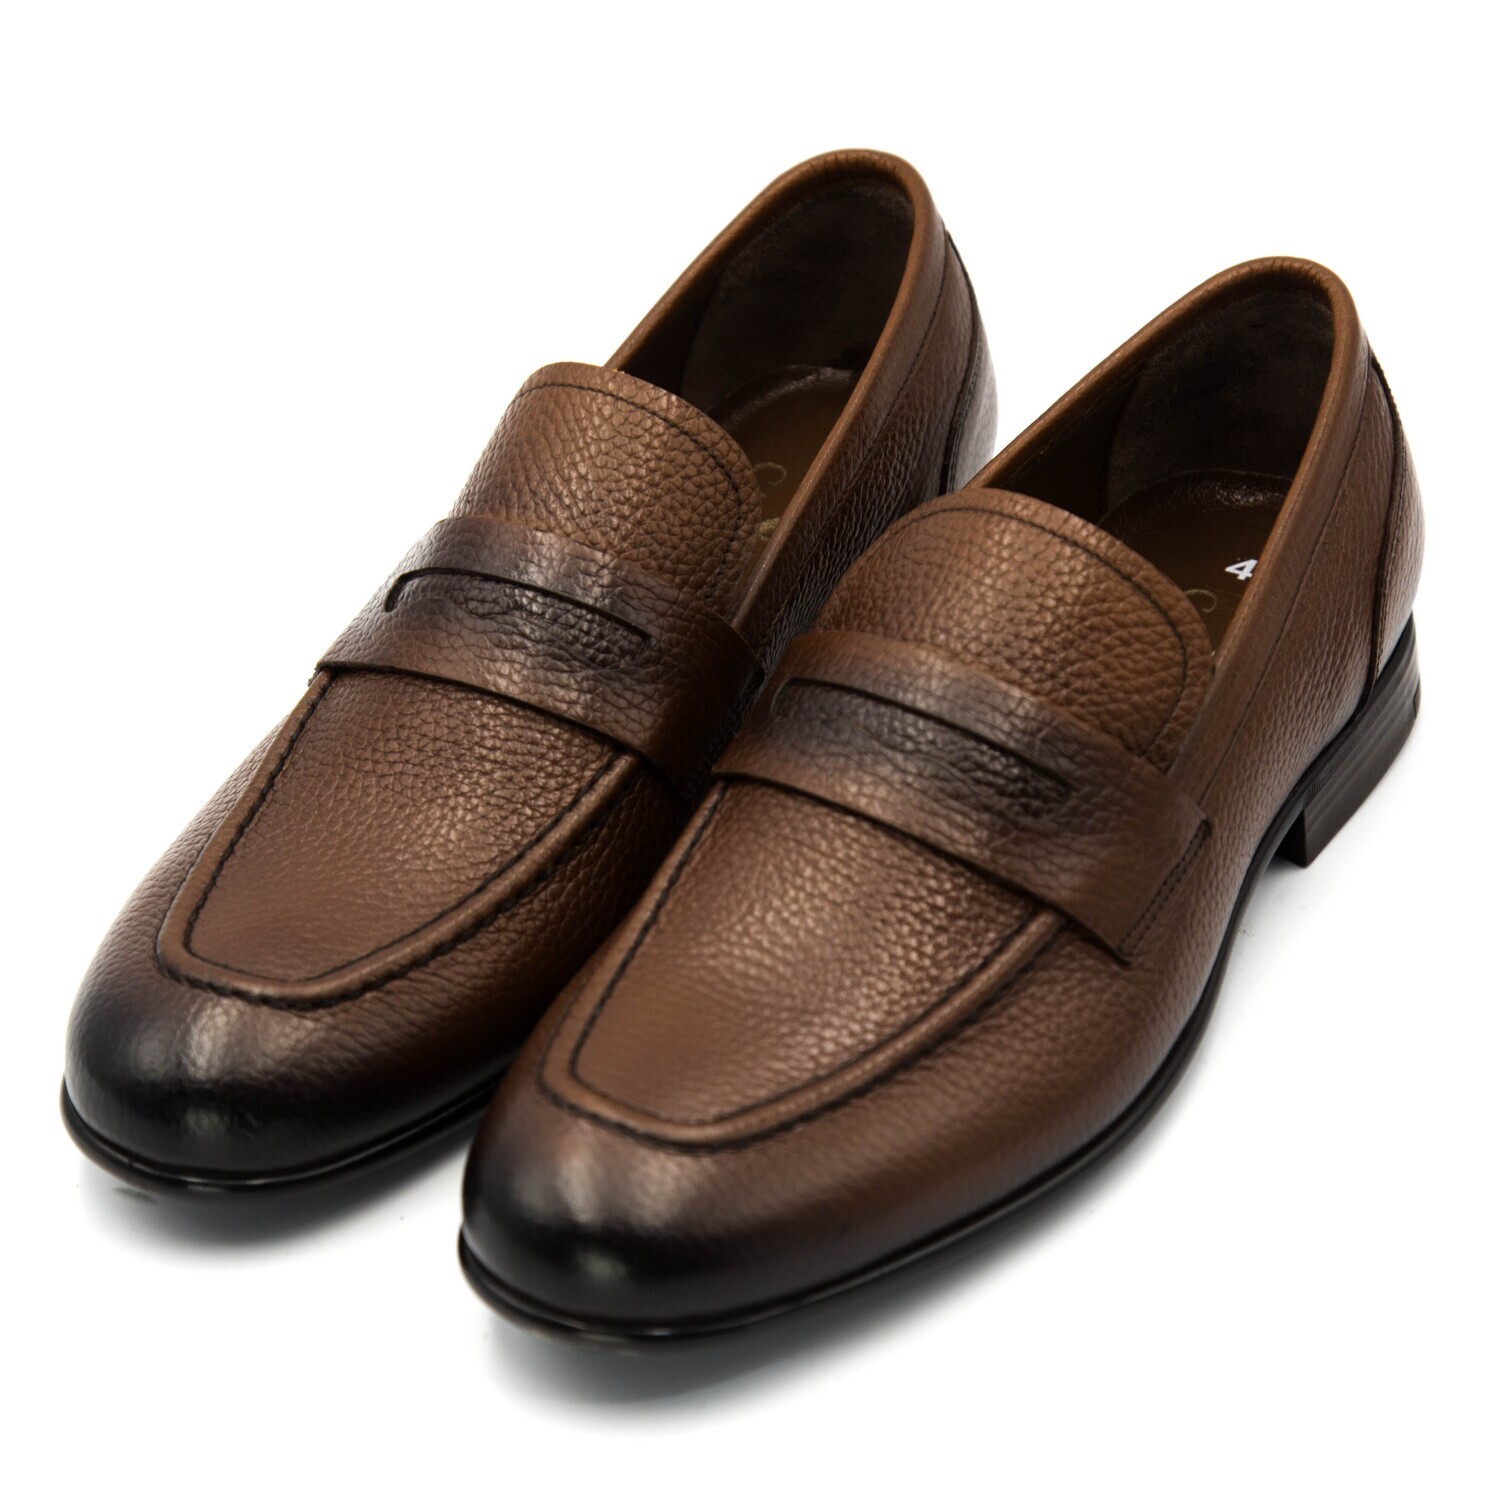 Soft genuine leather formal shoes for men